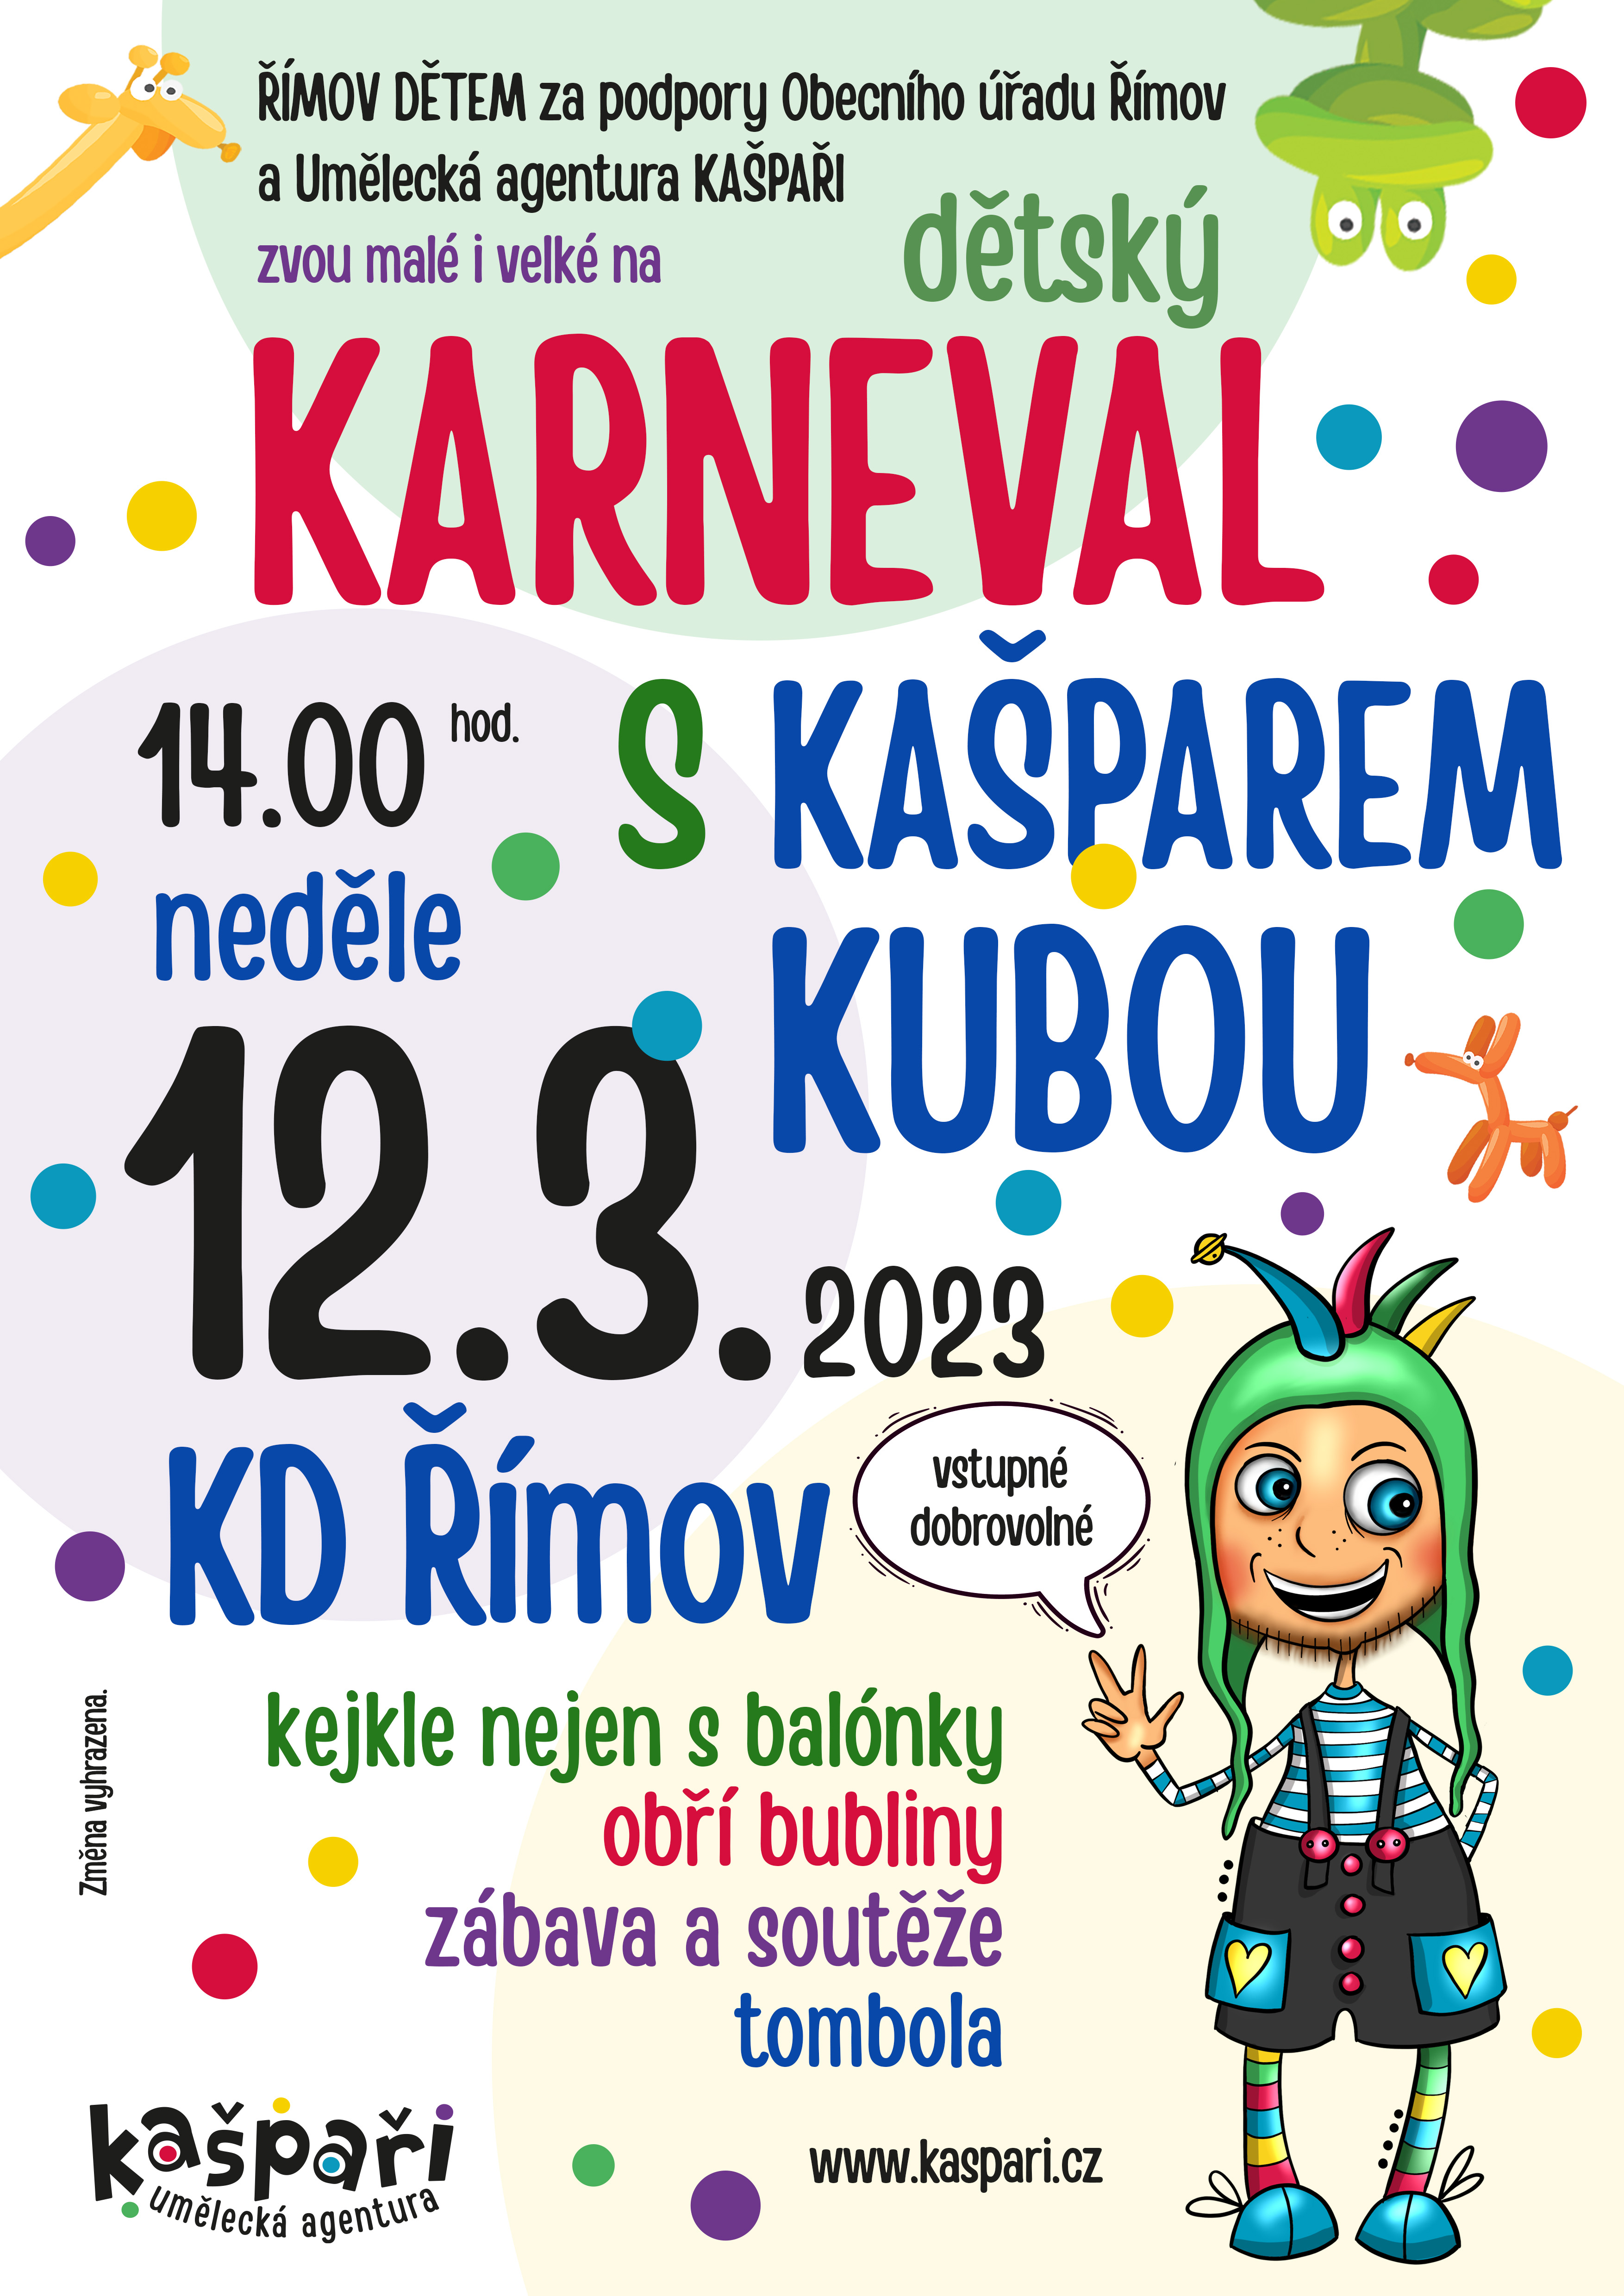 2023 03 12 karneval kaspar kuba KD RIMOV plakat